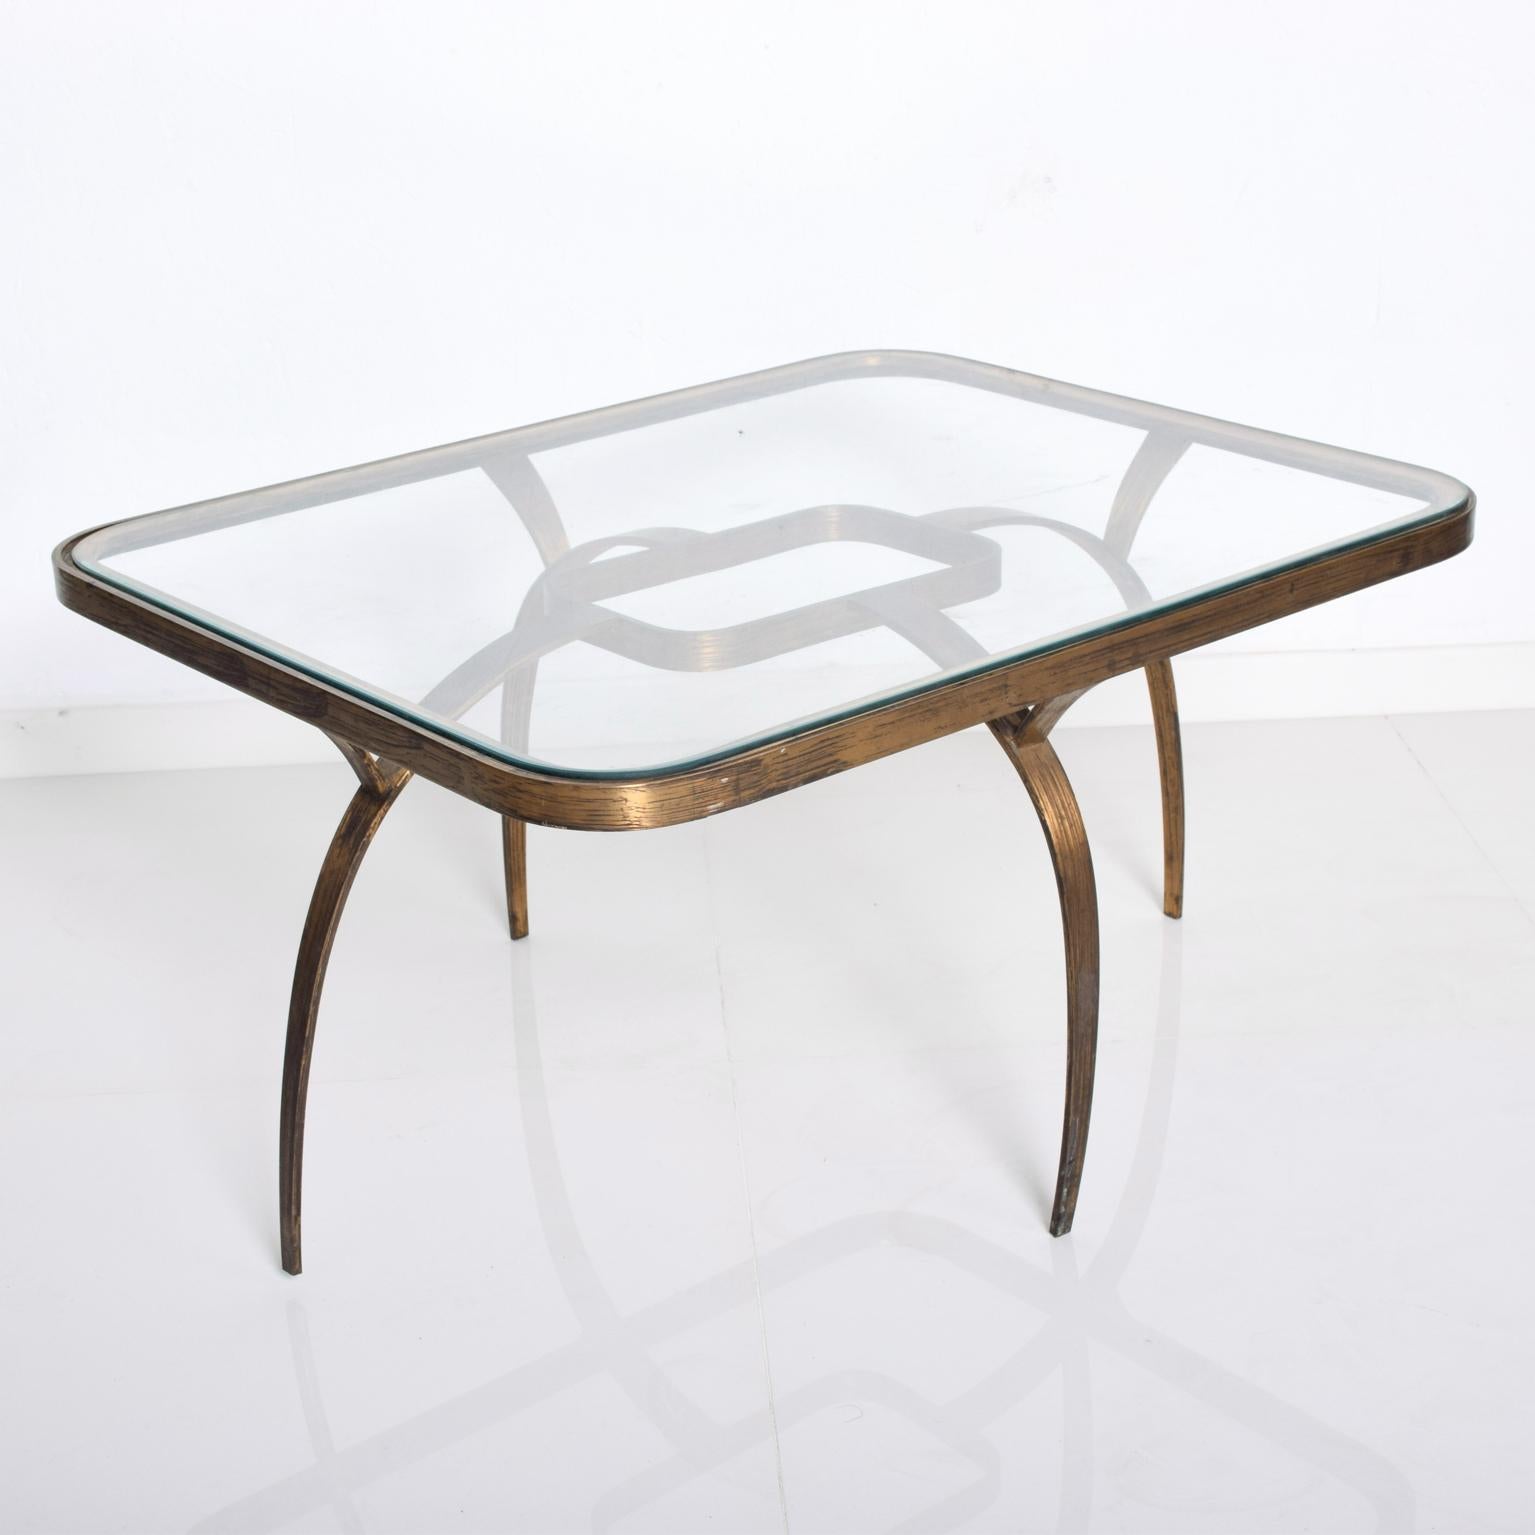 Mid-20th Century Modern Regency Sculptural Bronze Side Coffee Table Arturo Pani 1950s Mexico